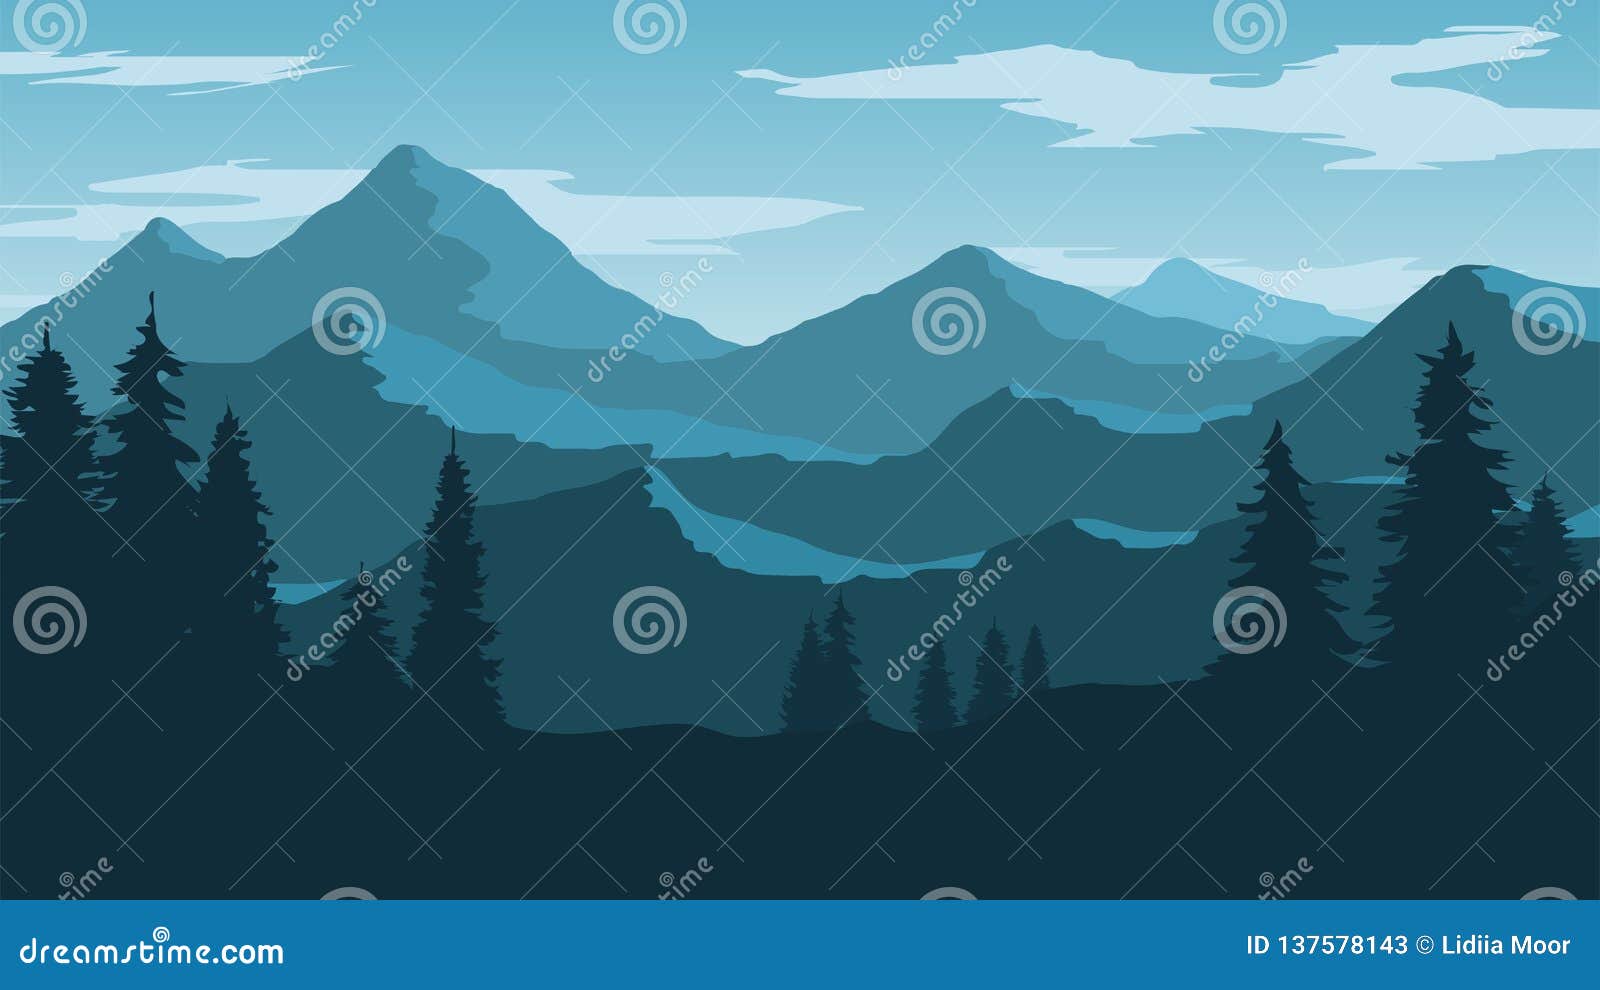 mountain range landscape